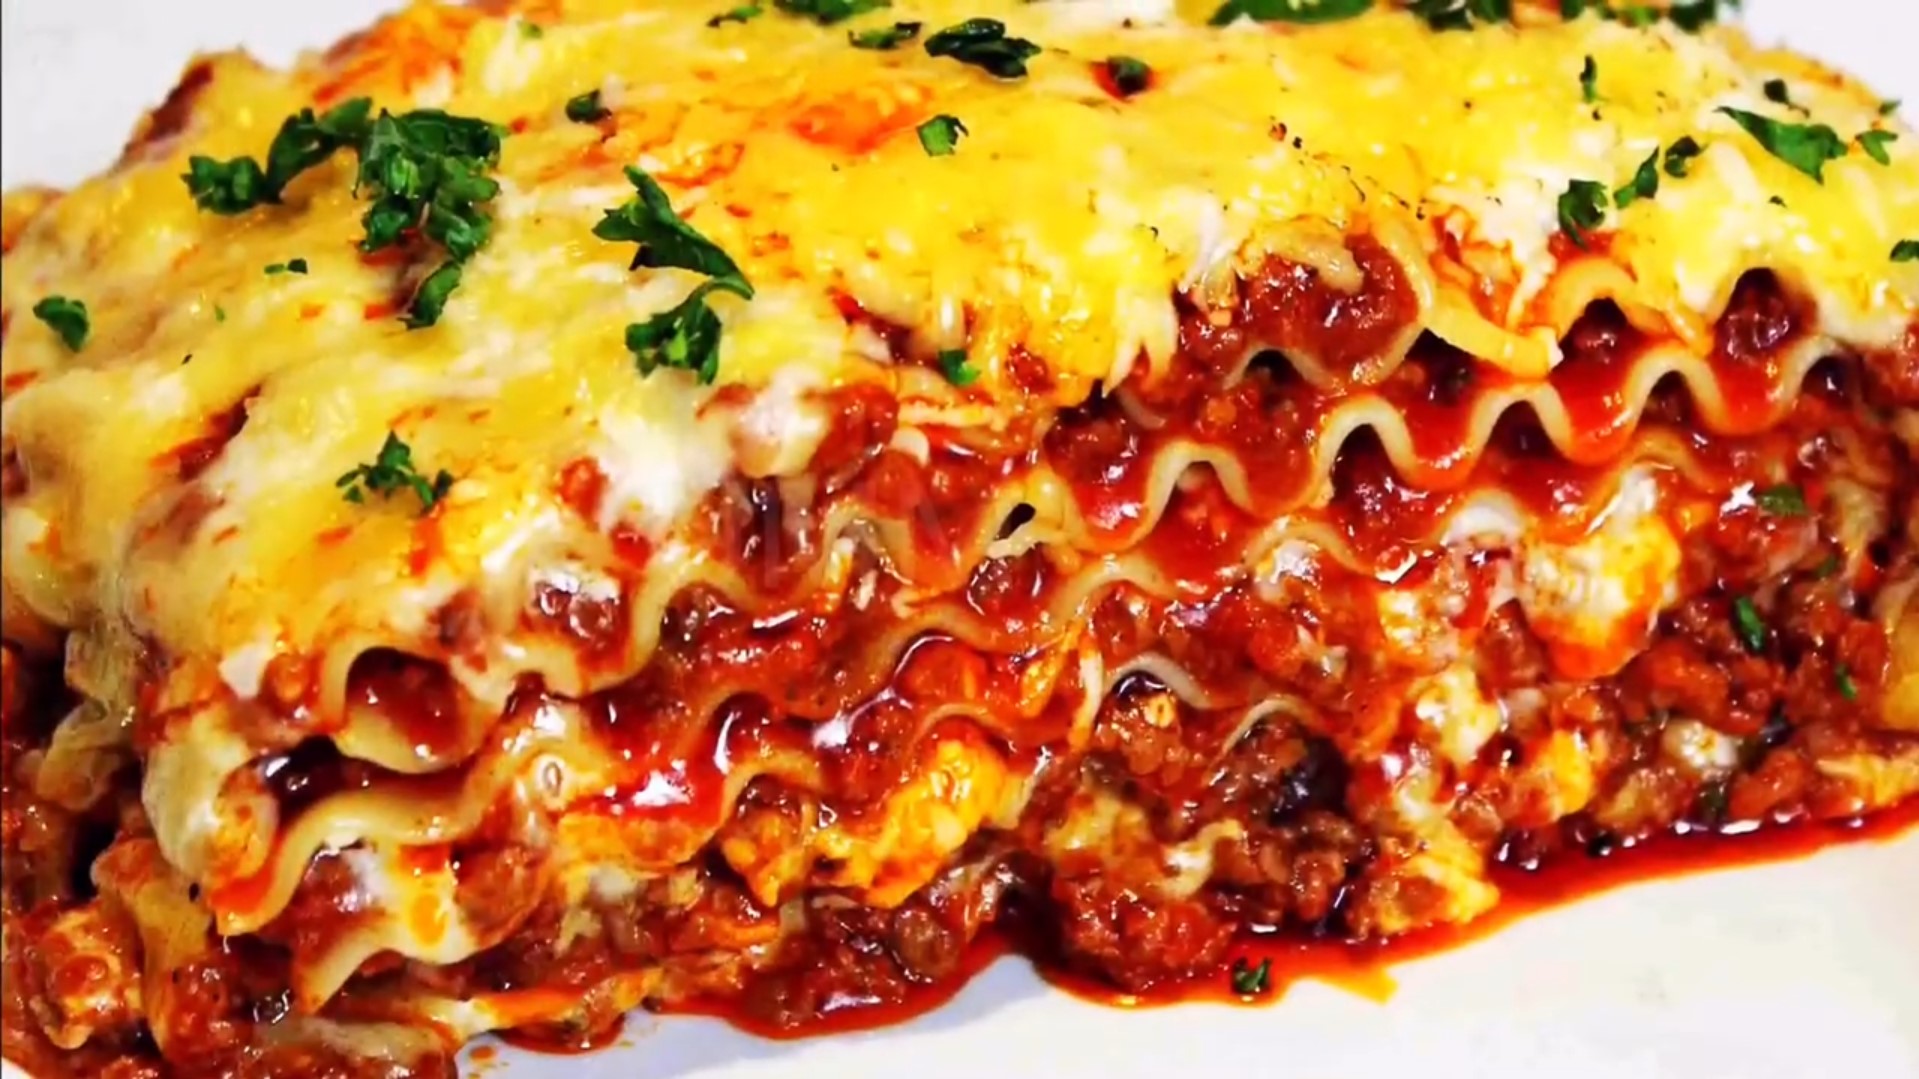 The Best Italian Lasagna Easy Homemade Lasagna Recipe Video Tasty Food Recipes